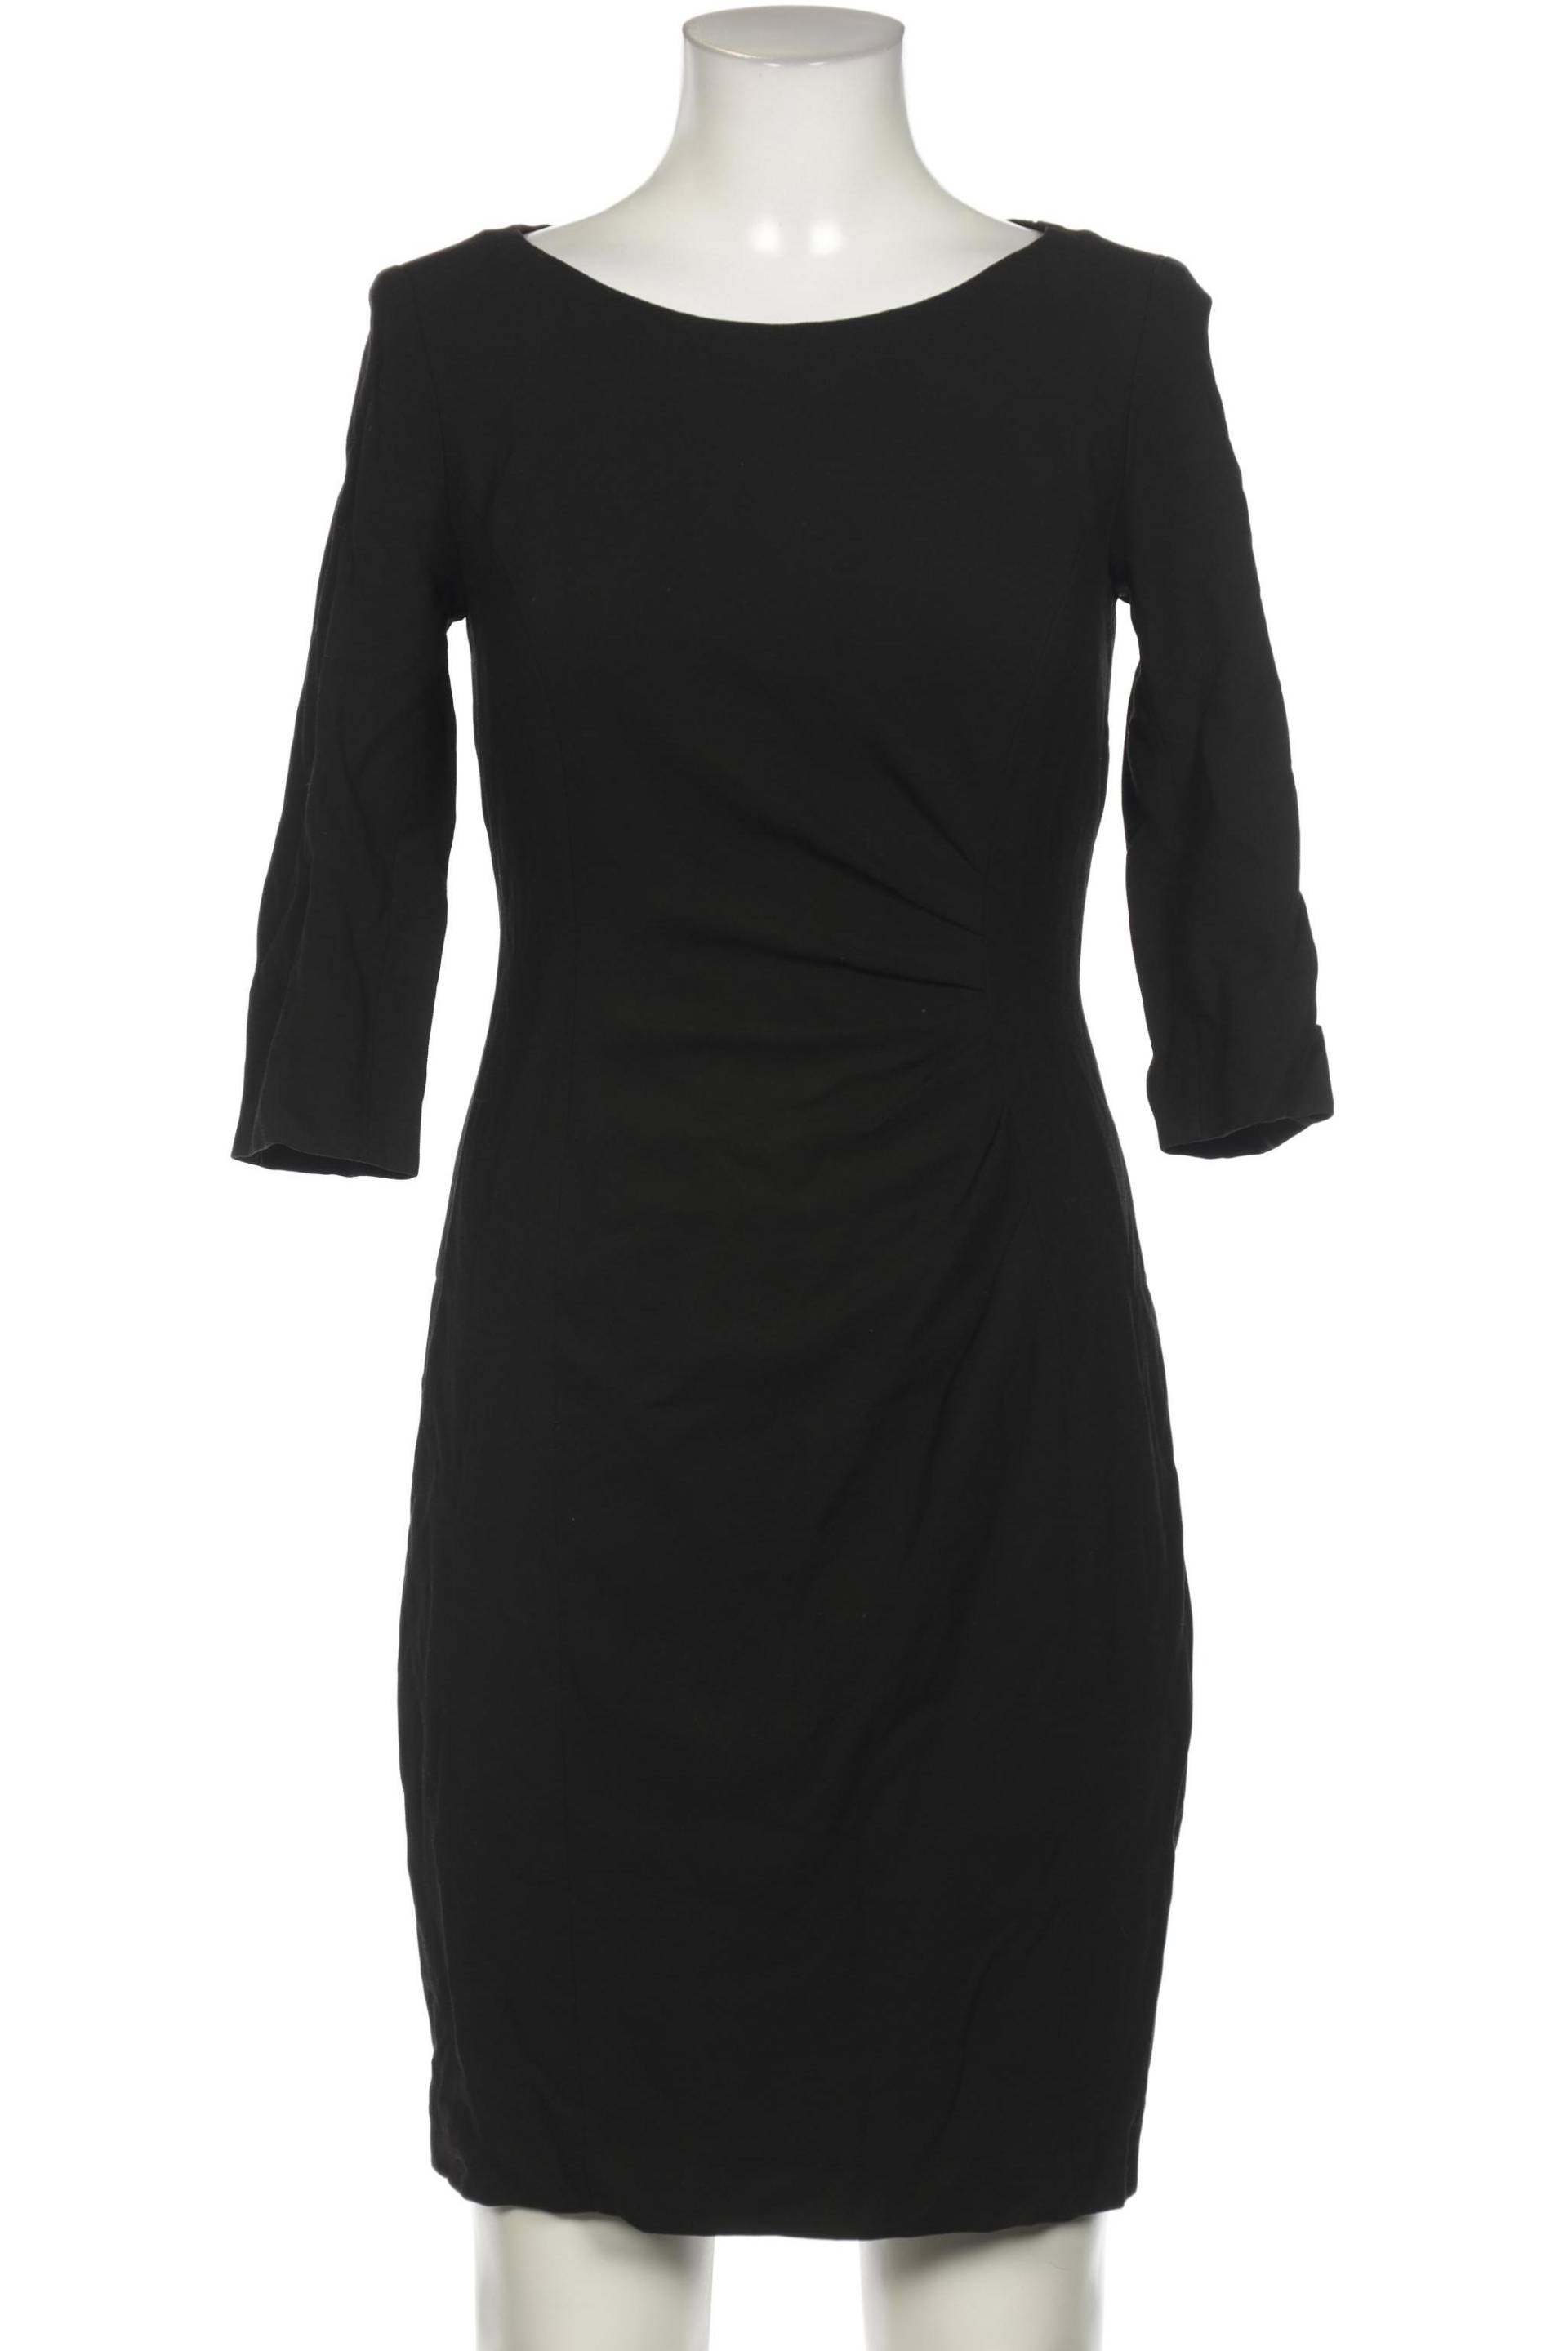 Rene Lezard Damen Kleid, schwarz von Rene Lezard